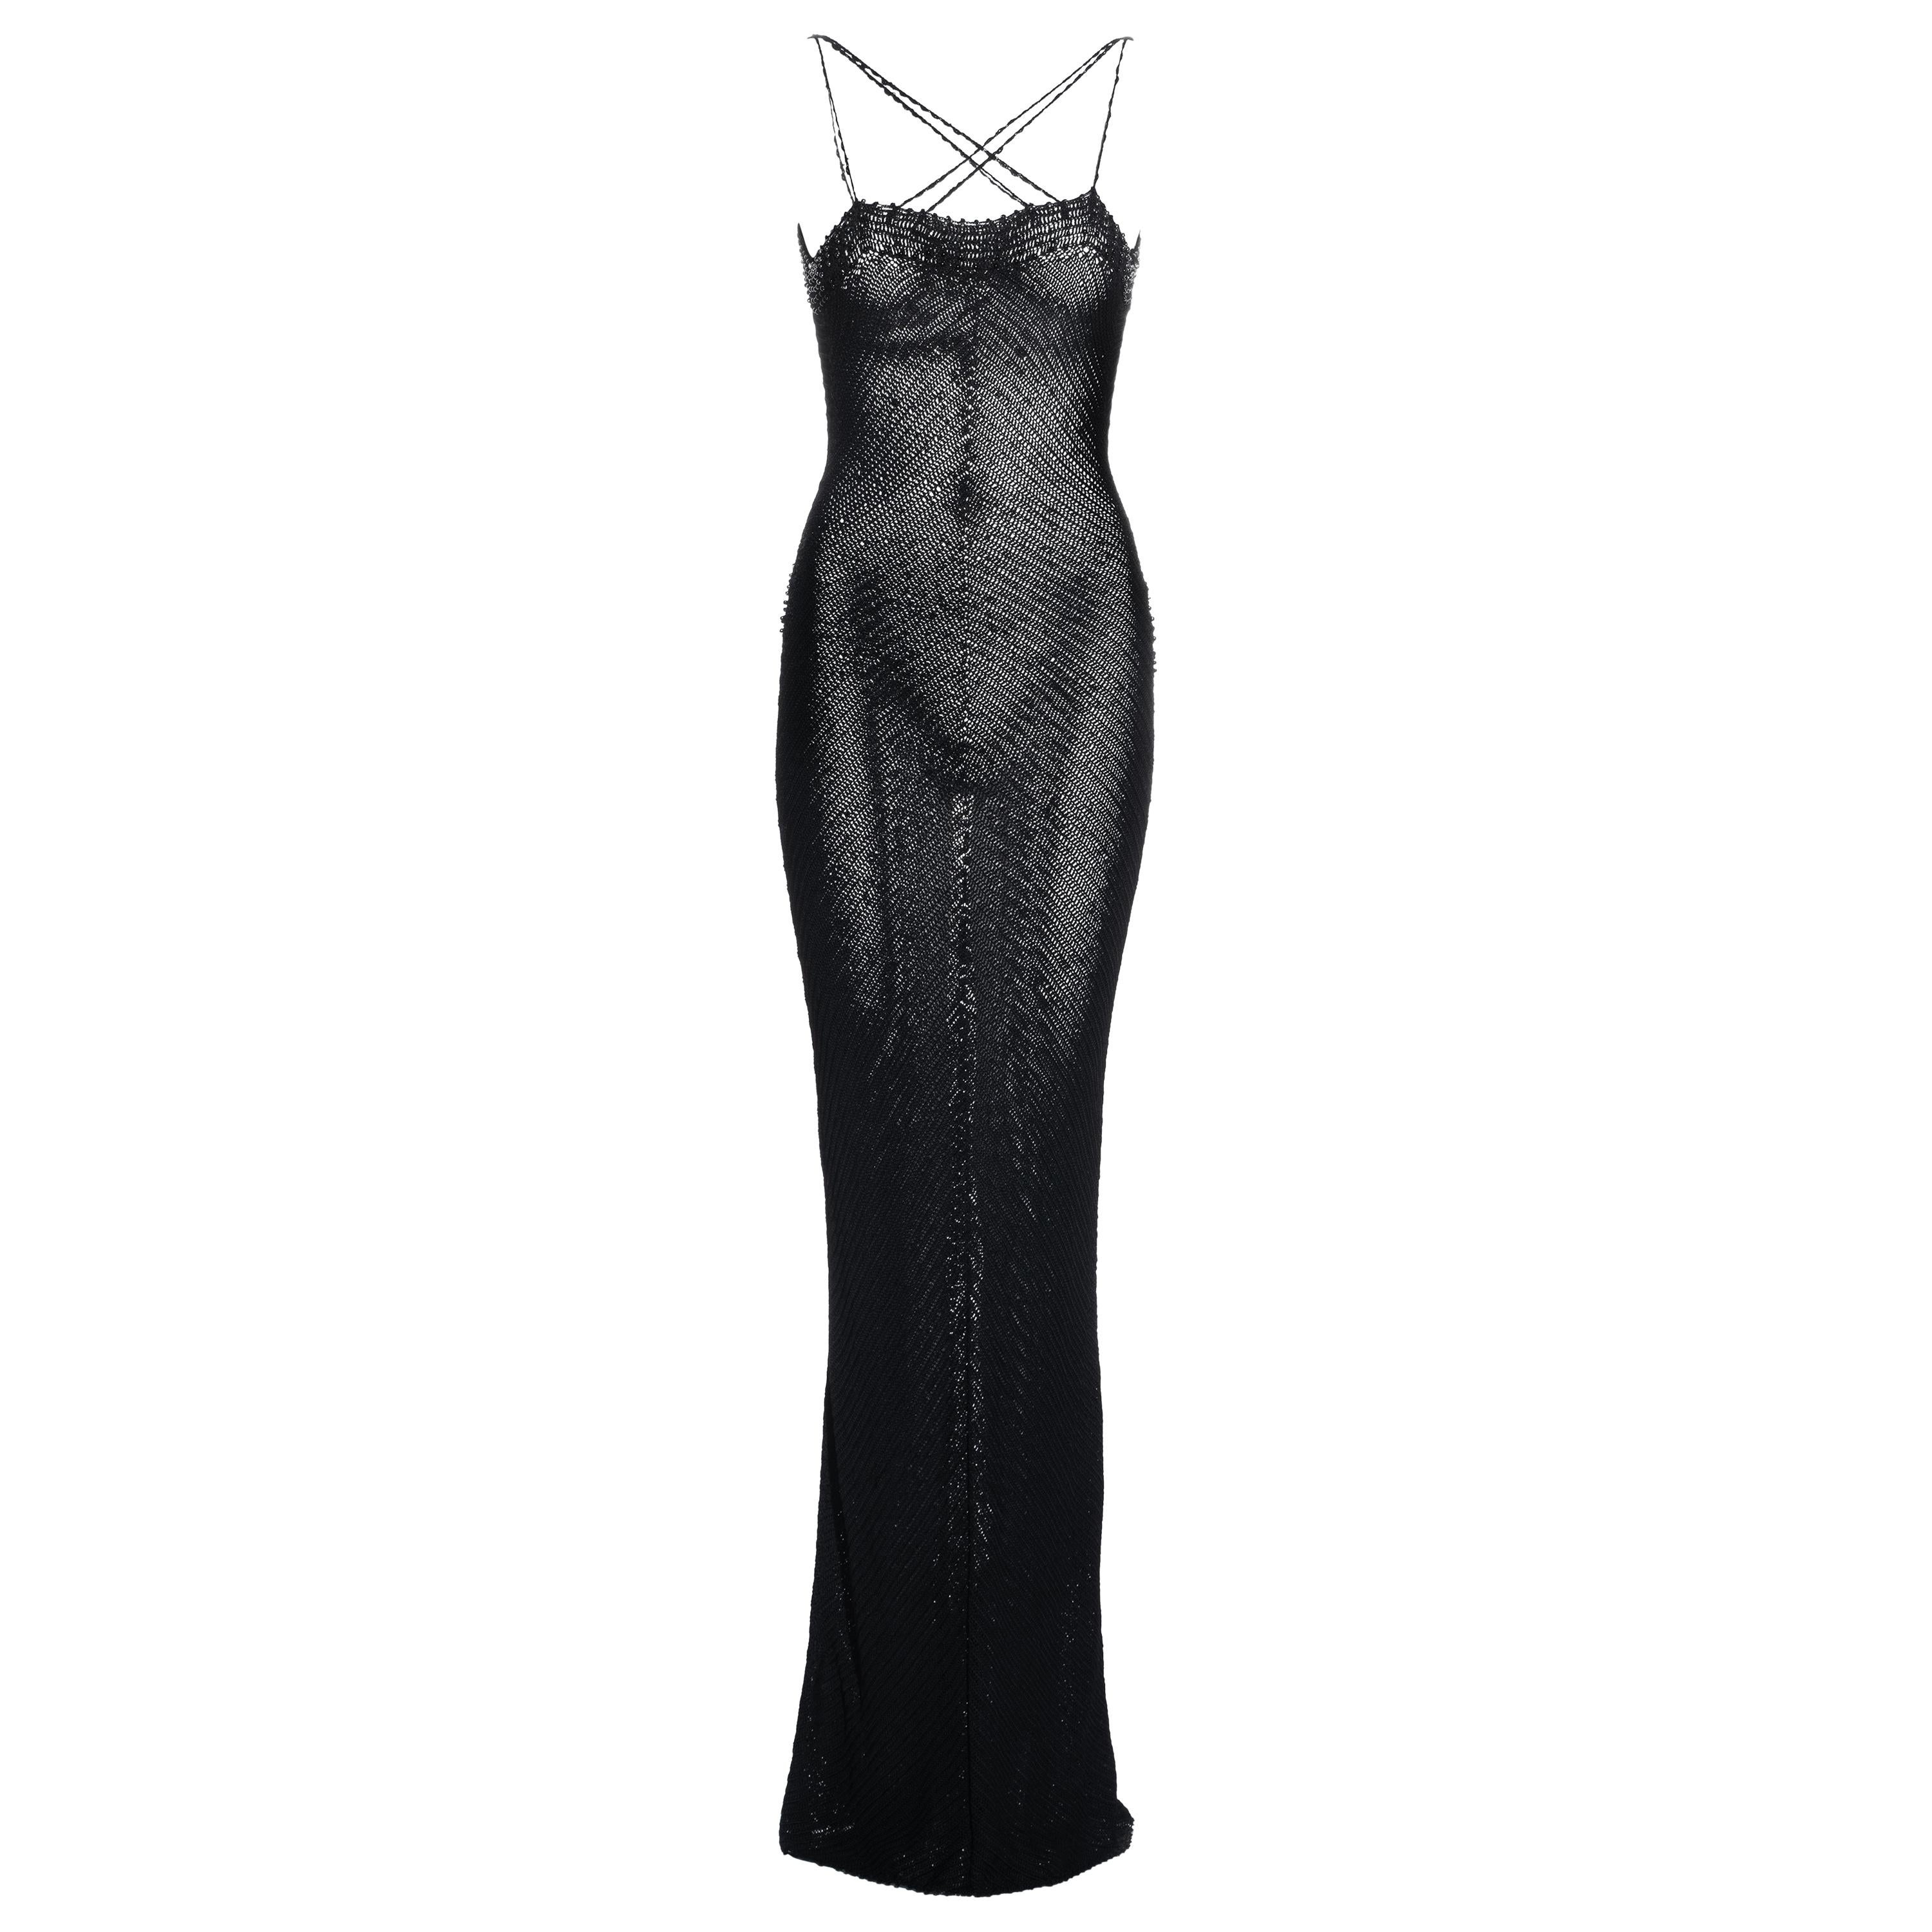 Giorgio Armani black rayon knit beaded maxi dress, c. 2000s